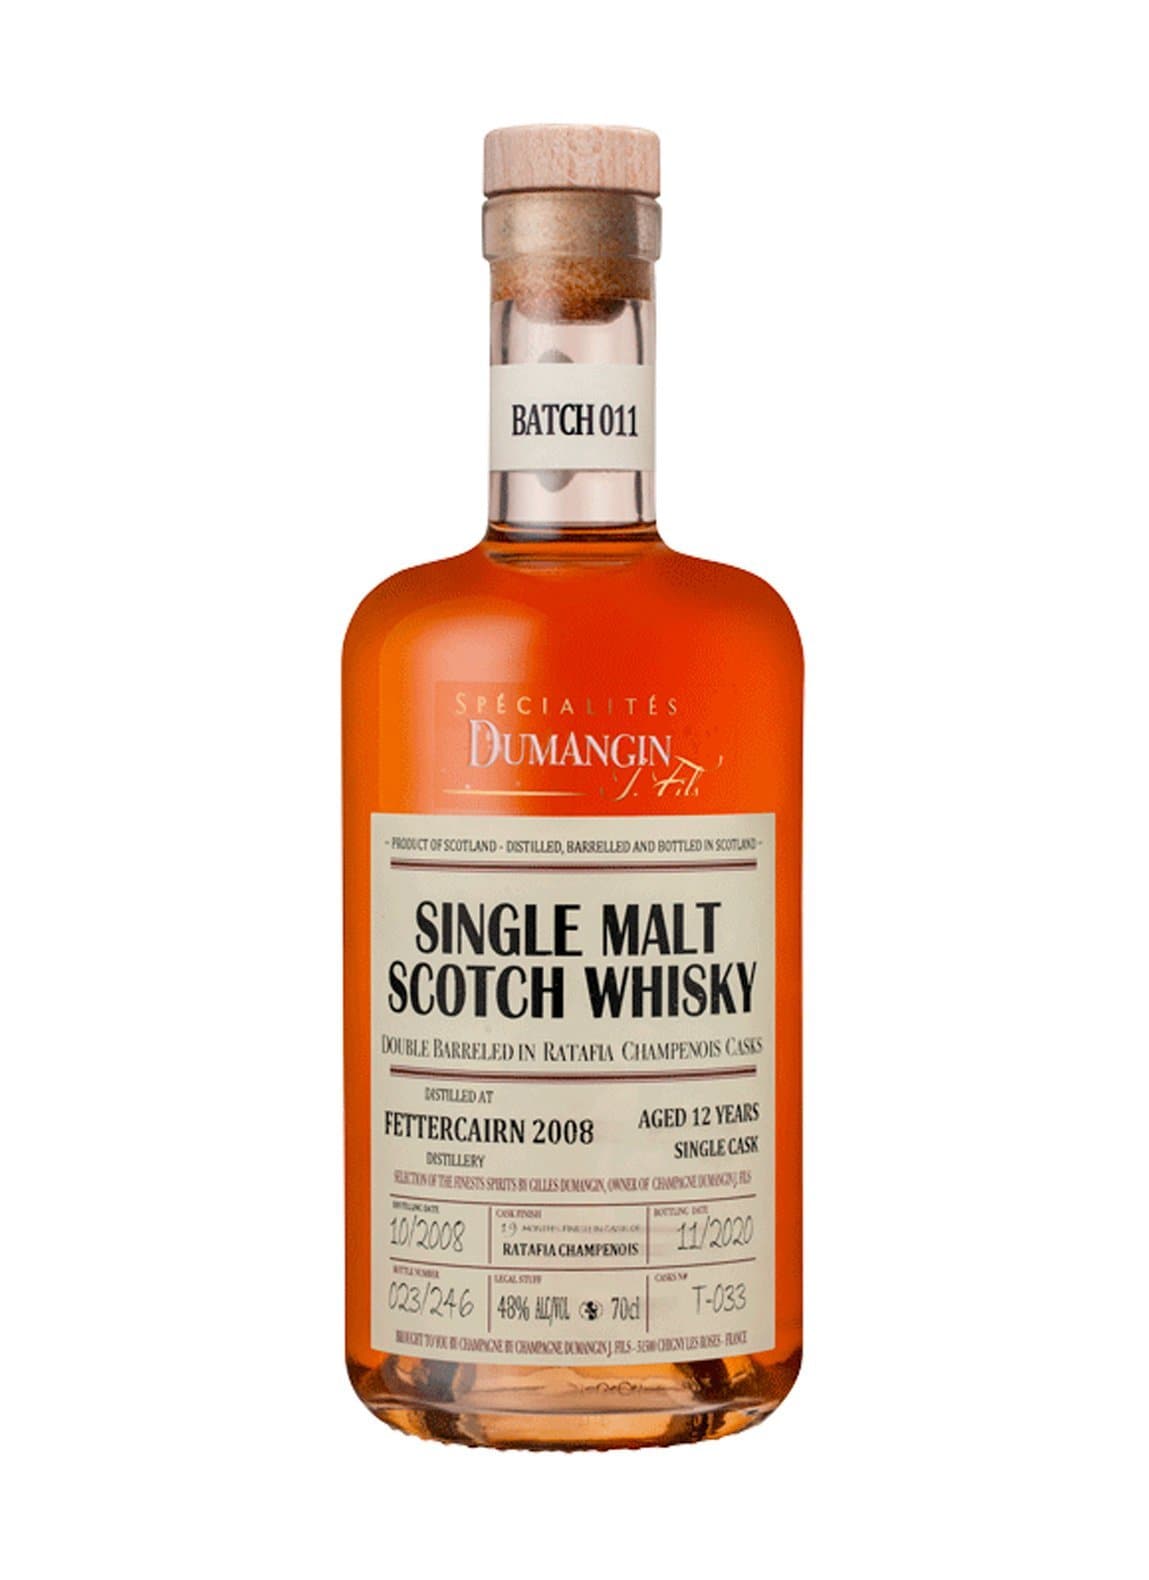 Dumangin Batch 011 Fettercairn 2008 Single Malt Scotch Whisky 48% 700ml | Whiskey | Shop online at Spirits of France